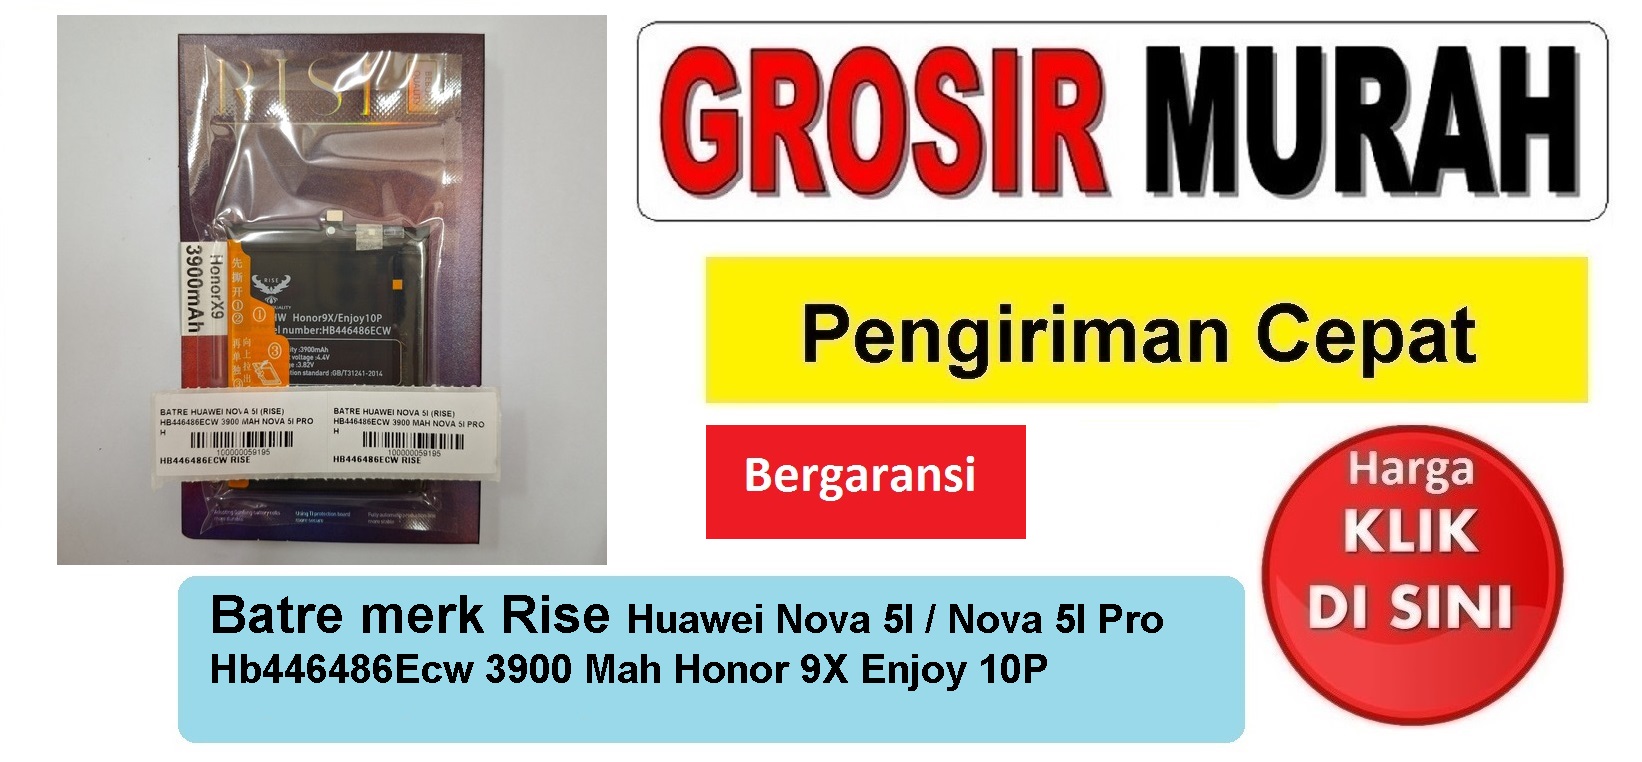 Batre merk Rise Huawei Nova 5I Hb446486Ecw 3900 Mah Nova 5I Pro Honor 9X Enjoy 10P Baterai Battery Bergaransi Batere